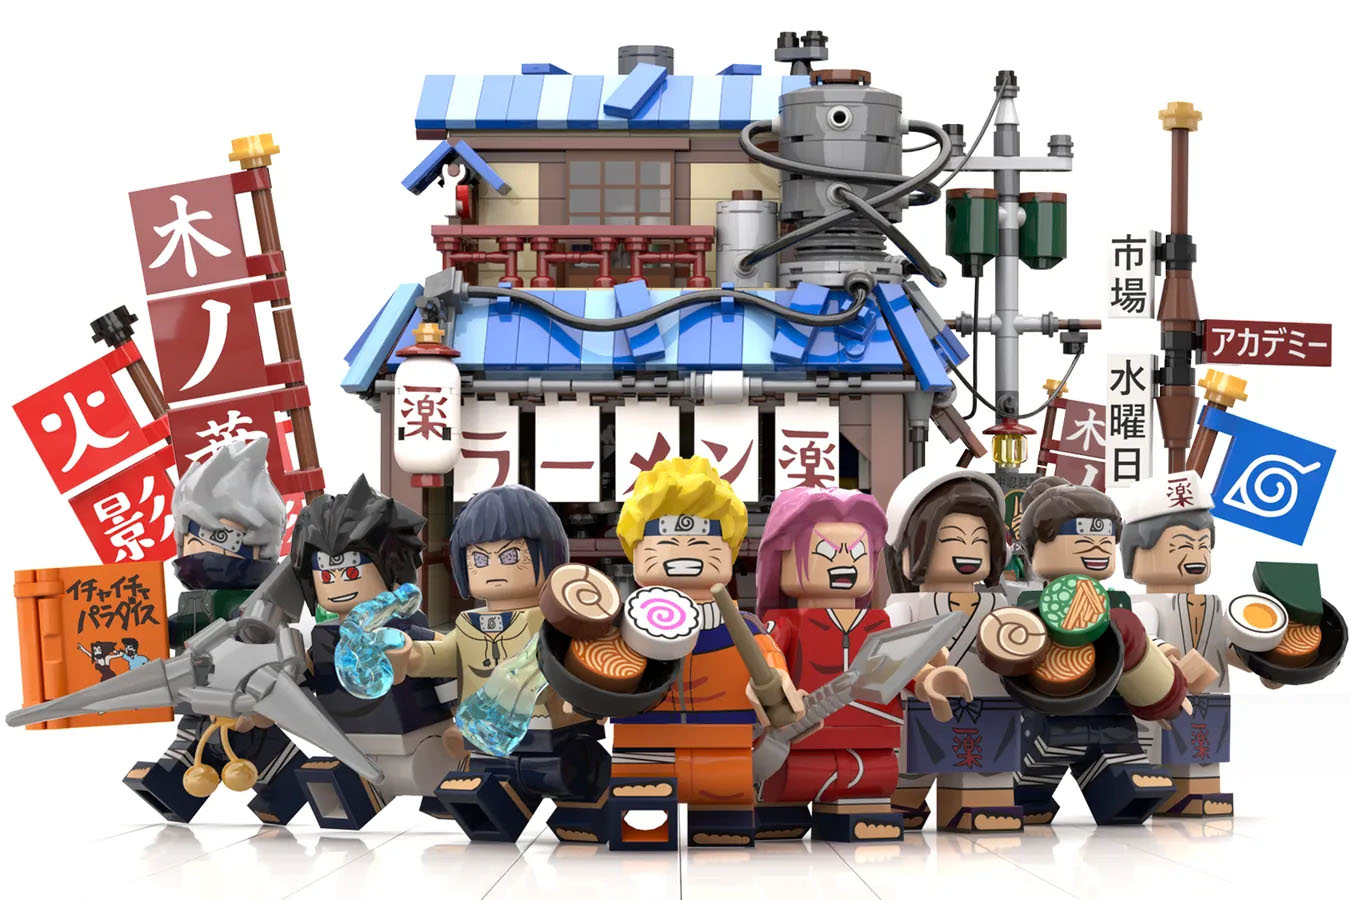  NARUTO: ICHIRAKU RAMEN SHOP Achieves 10K Support on LEGO IDEAS